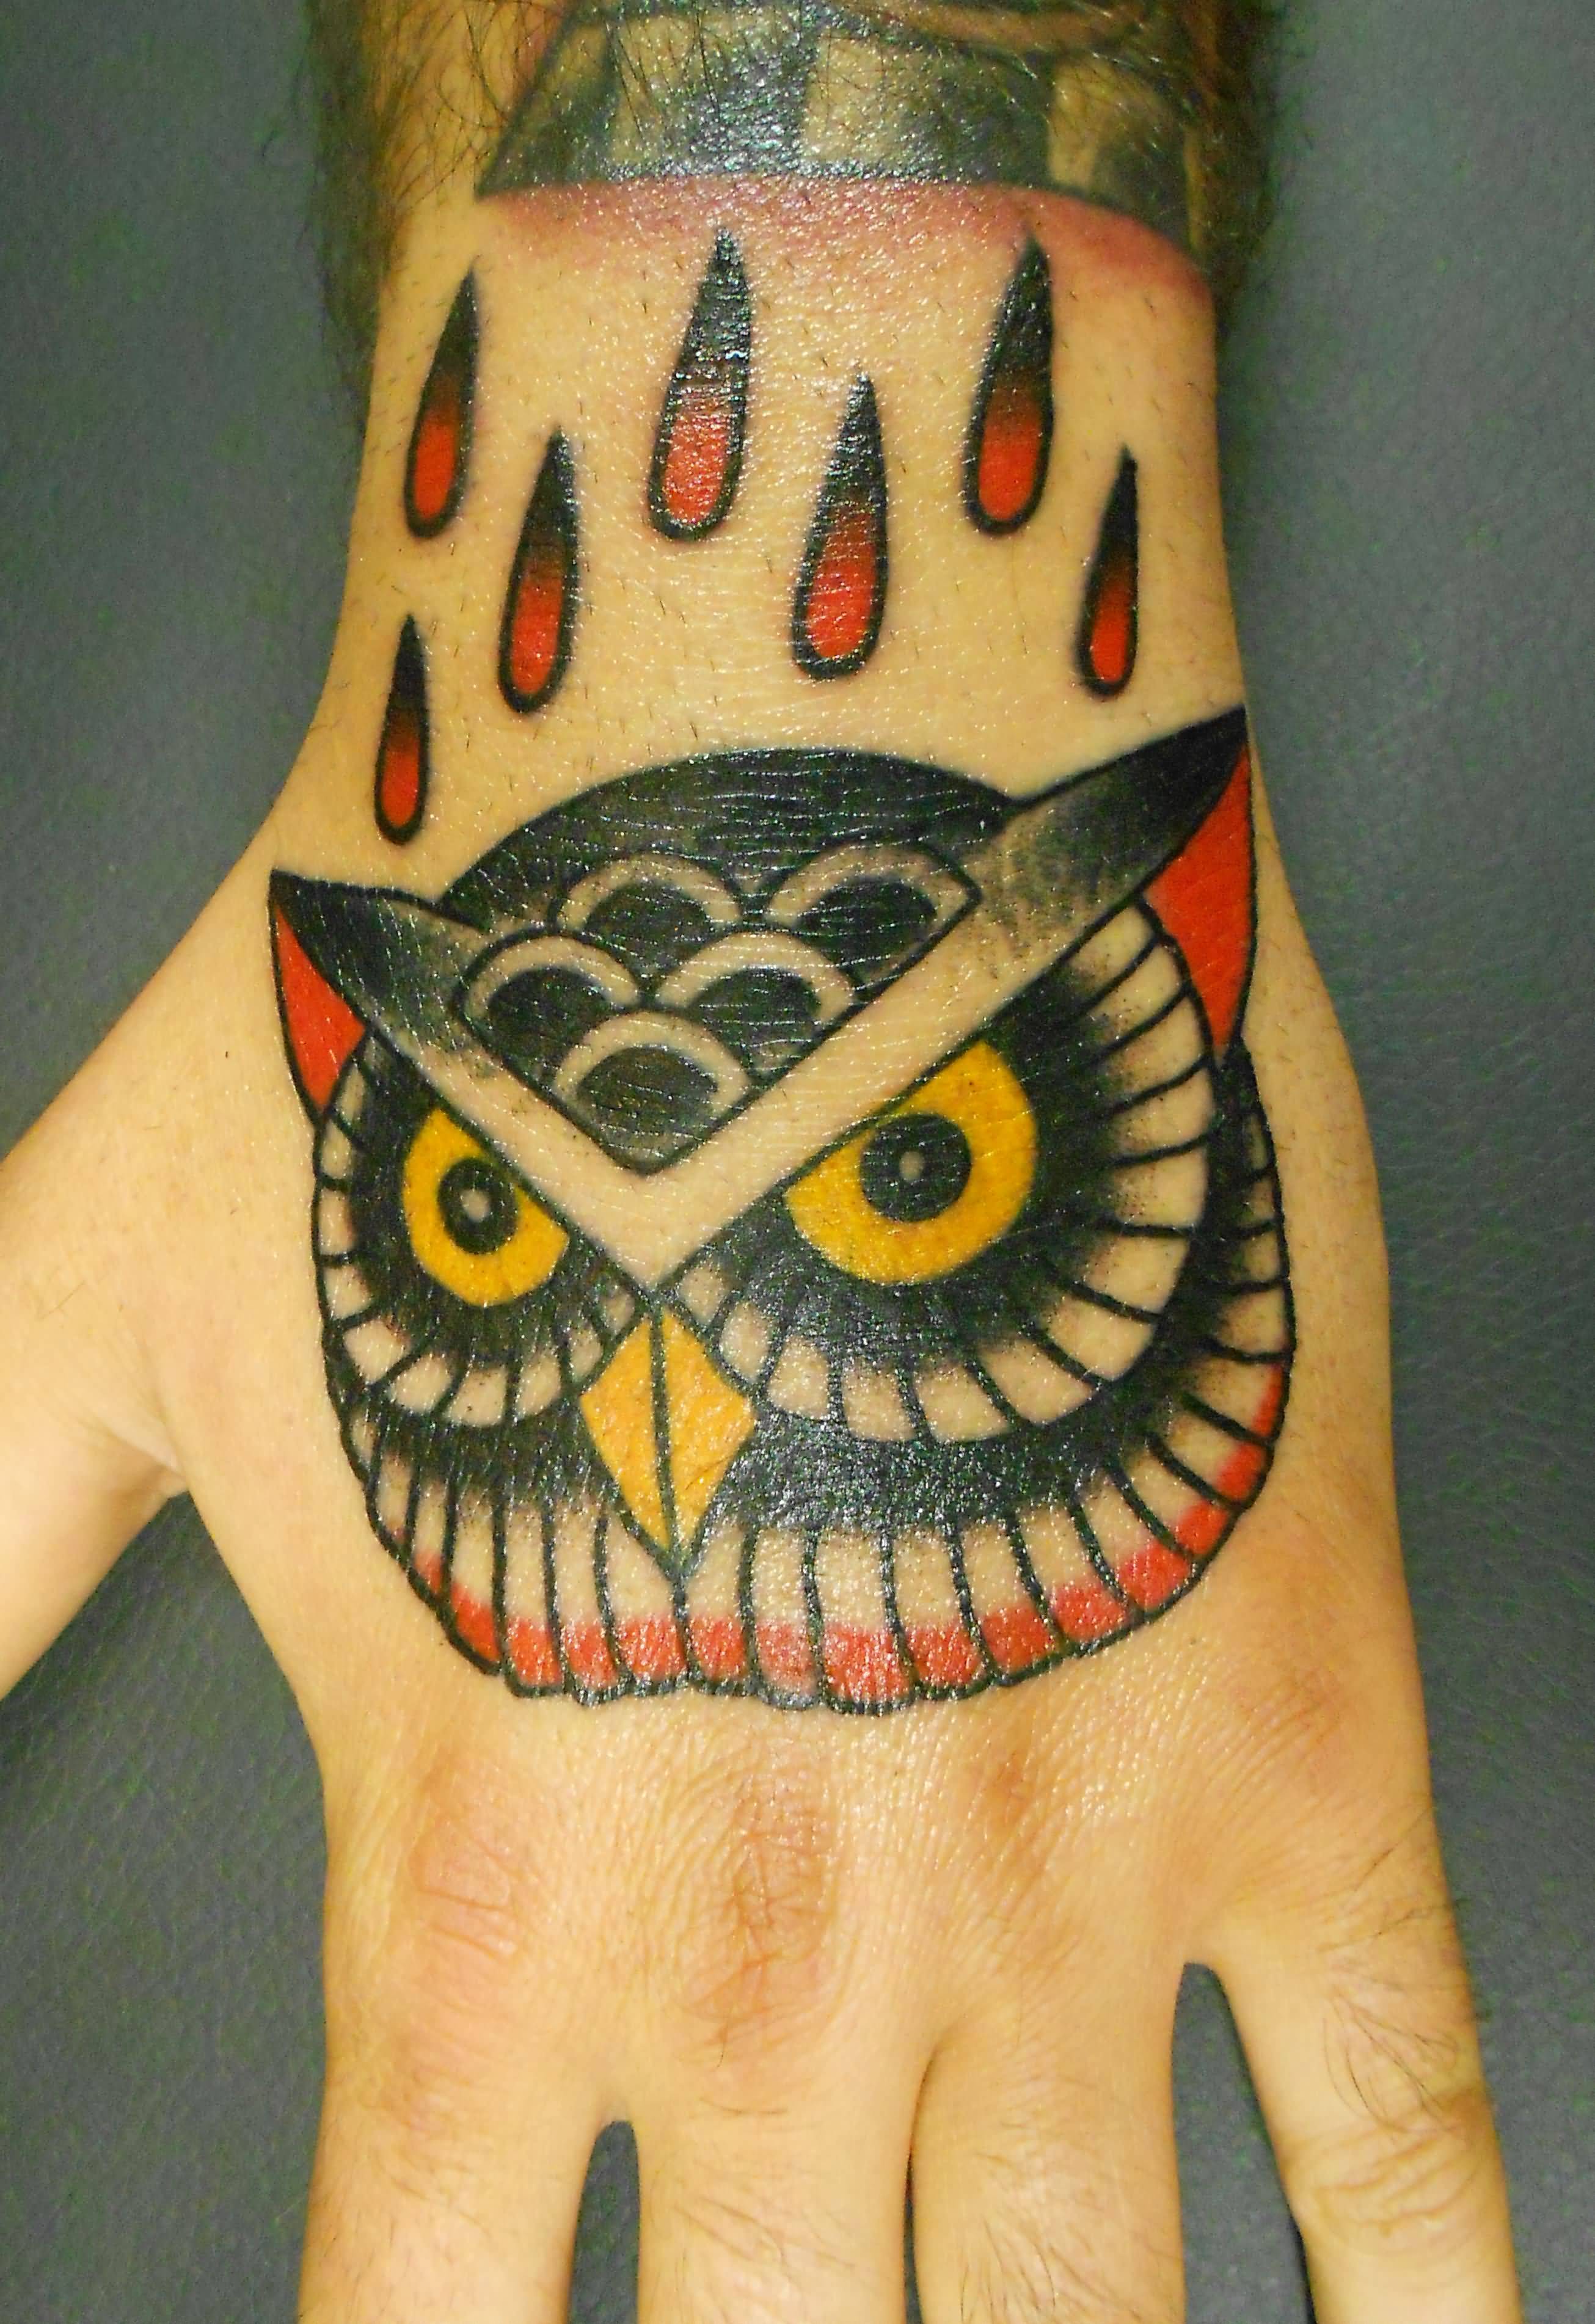 Traditional Owl Head Tattoo On Left Hand